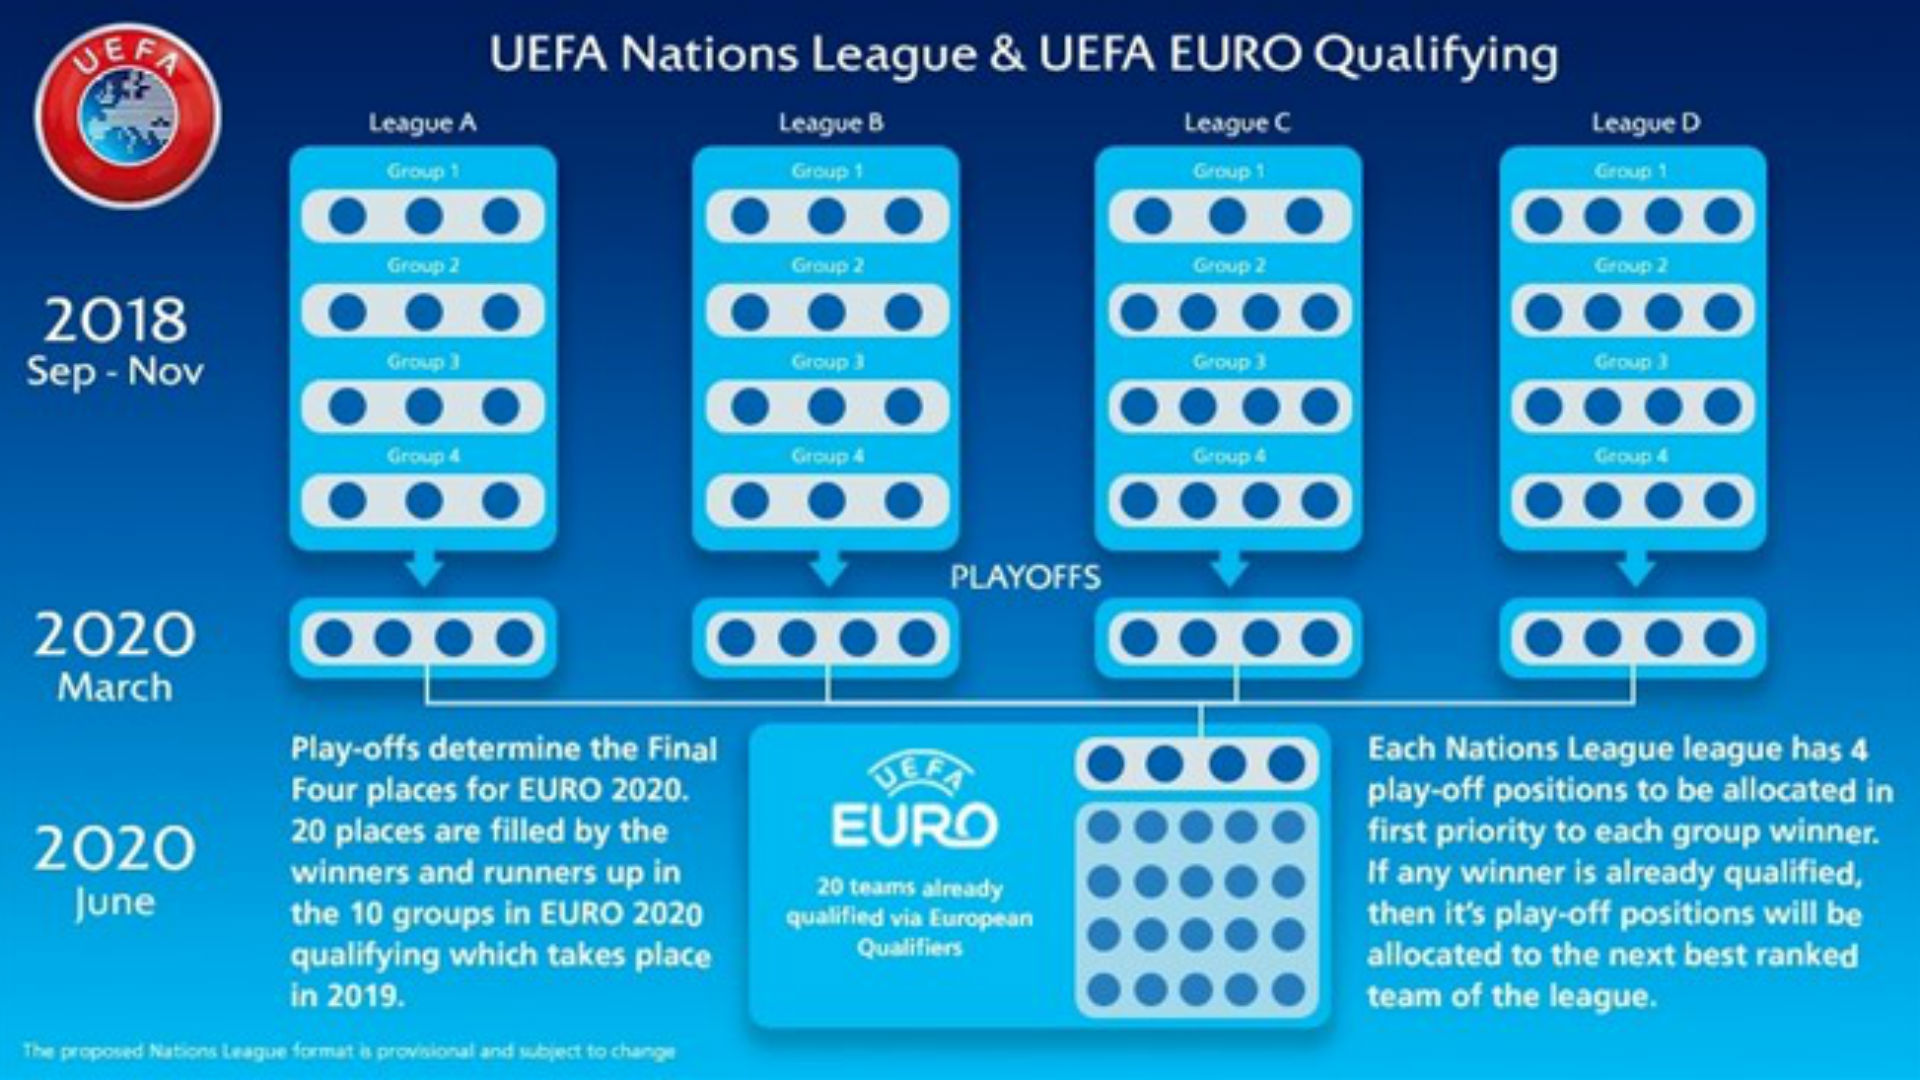 0_1553461216721_uefa-nations-league-euro-2020-qualifying_1dkogu3c2jr2u1vv1dk50nkbyo.jpg